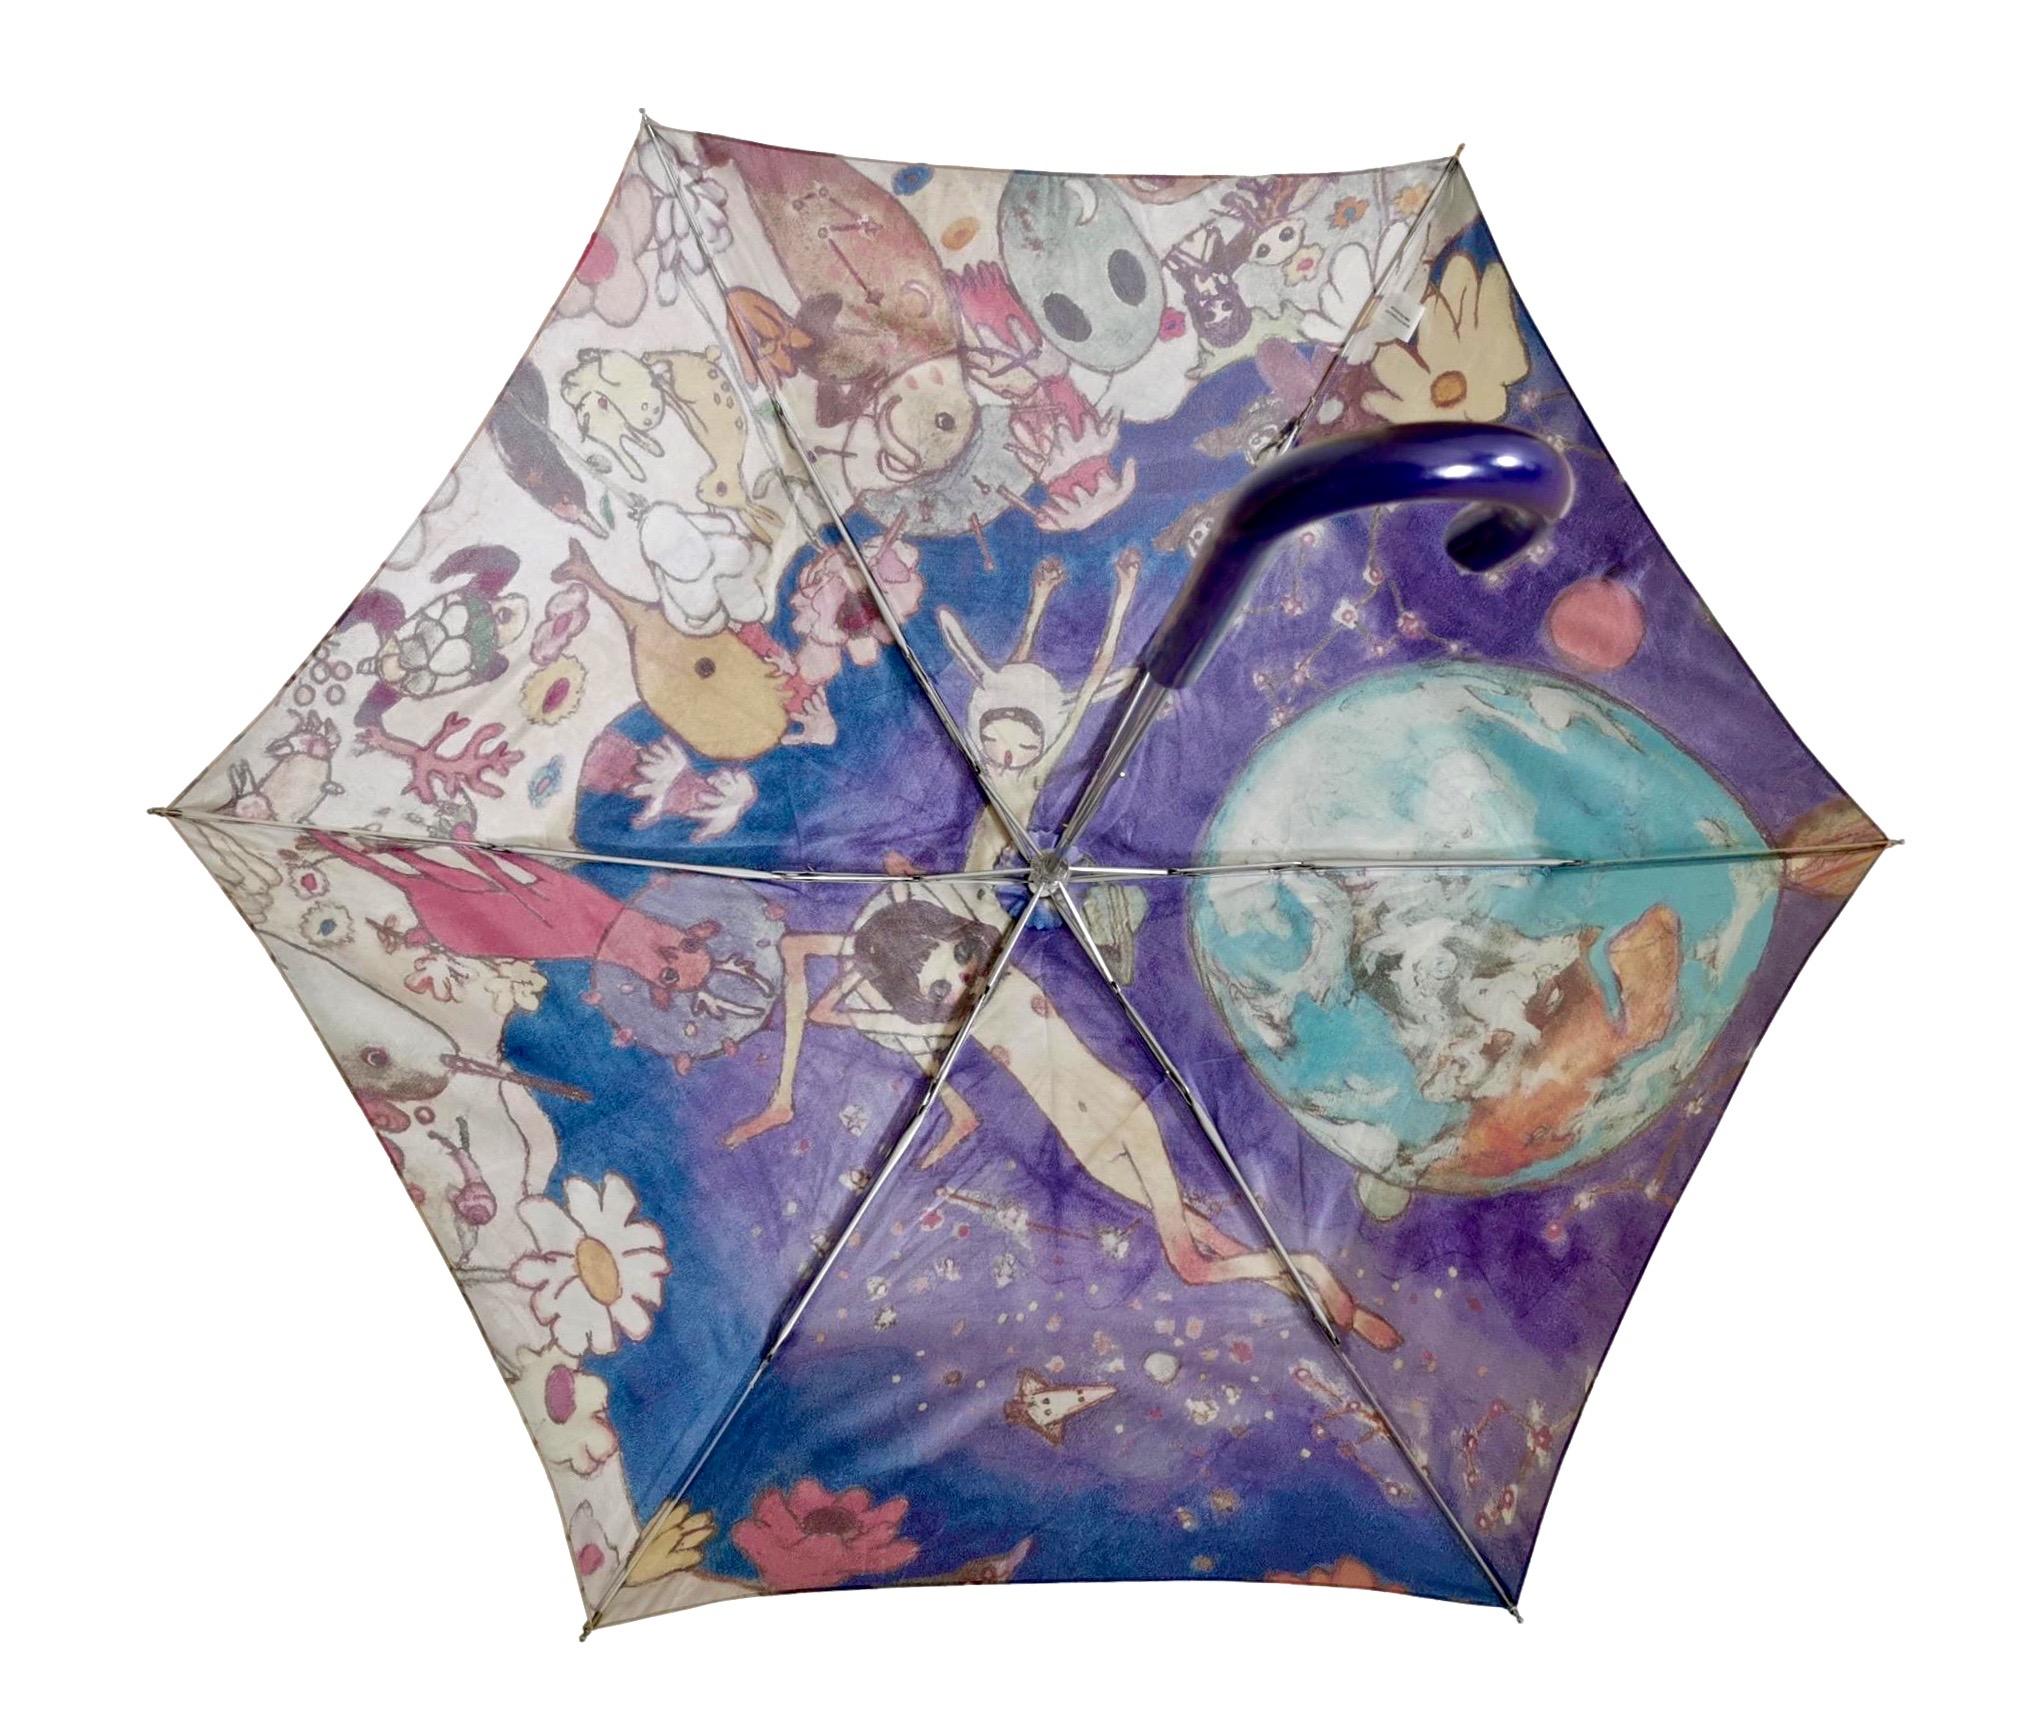 Issey Miyake Aya Takano 2004 Limited Edition Umbrella  For Sale 2